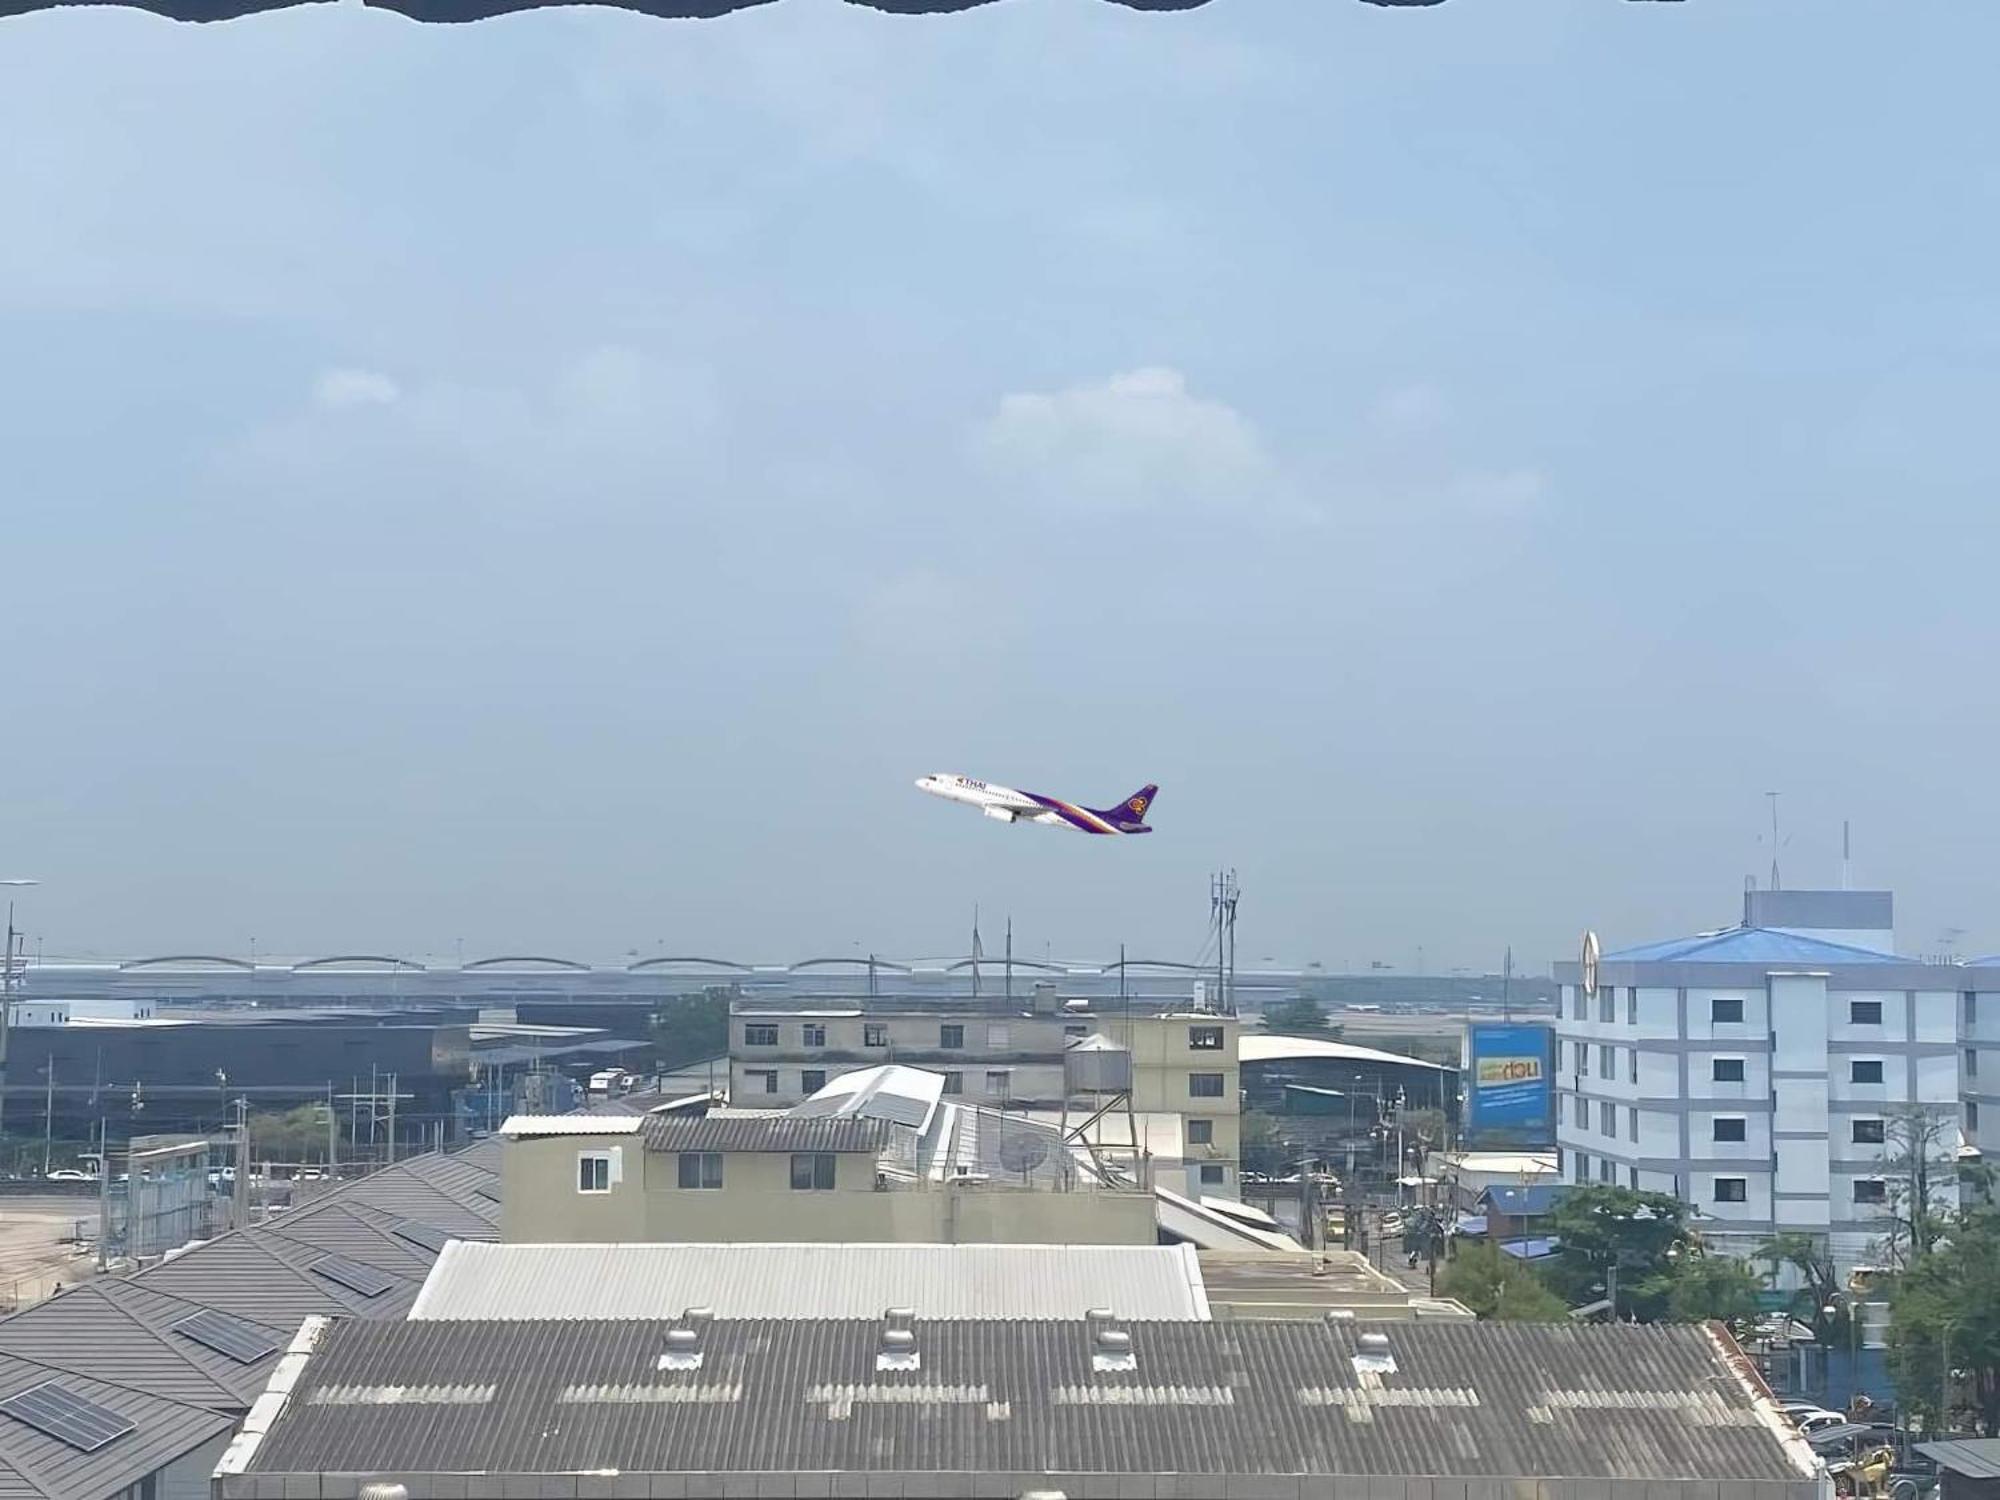 Plai And Herbs Suvarnabhumi Airport Banguecoque Exterior foto